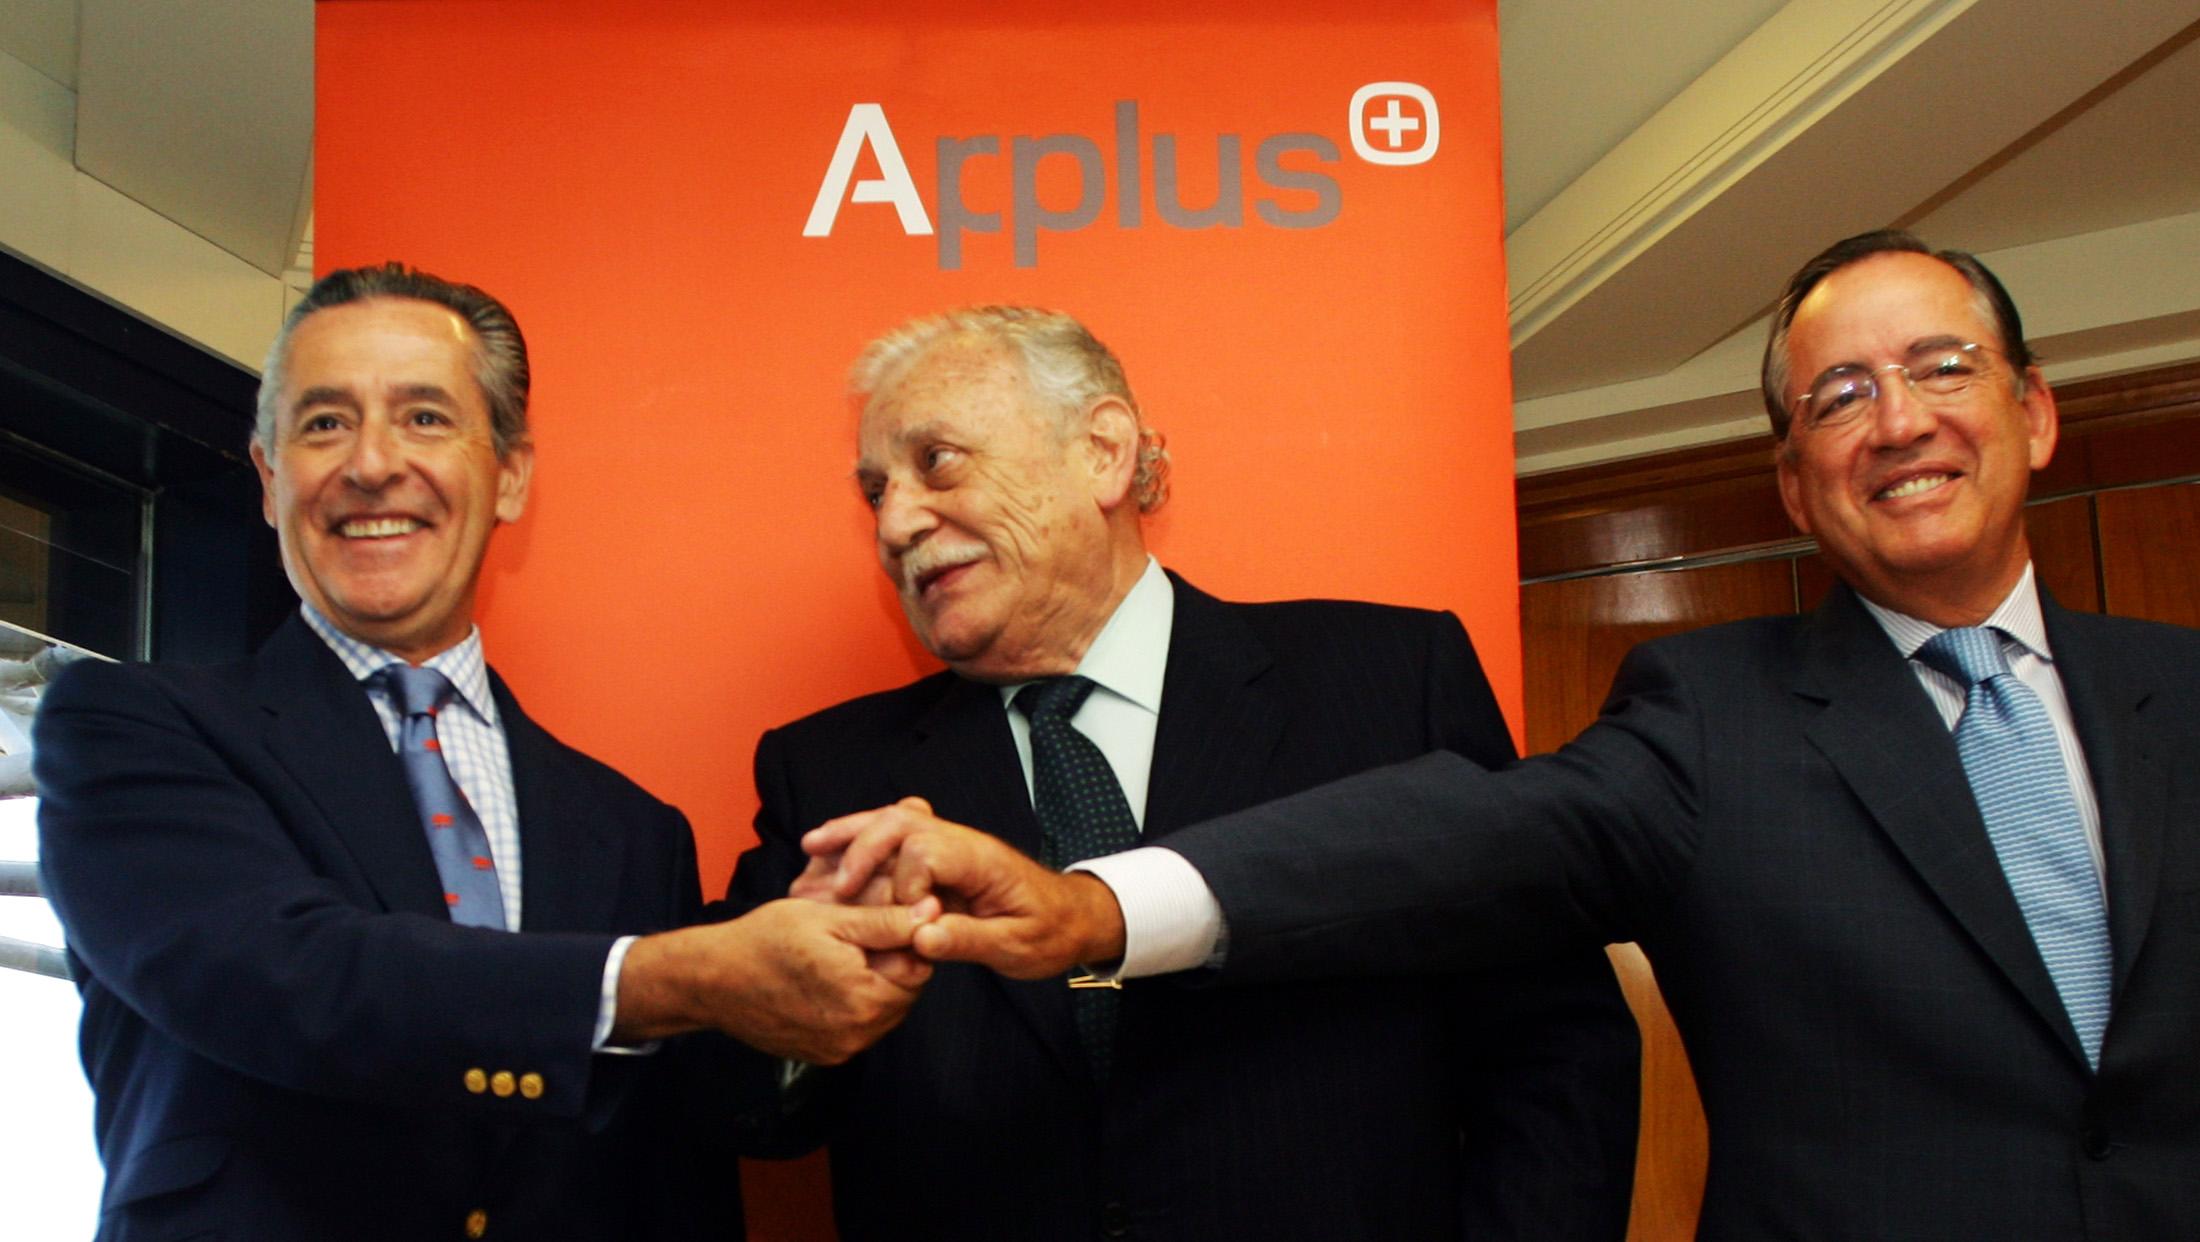 Applus draws takeover interest from Apollo, Apax